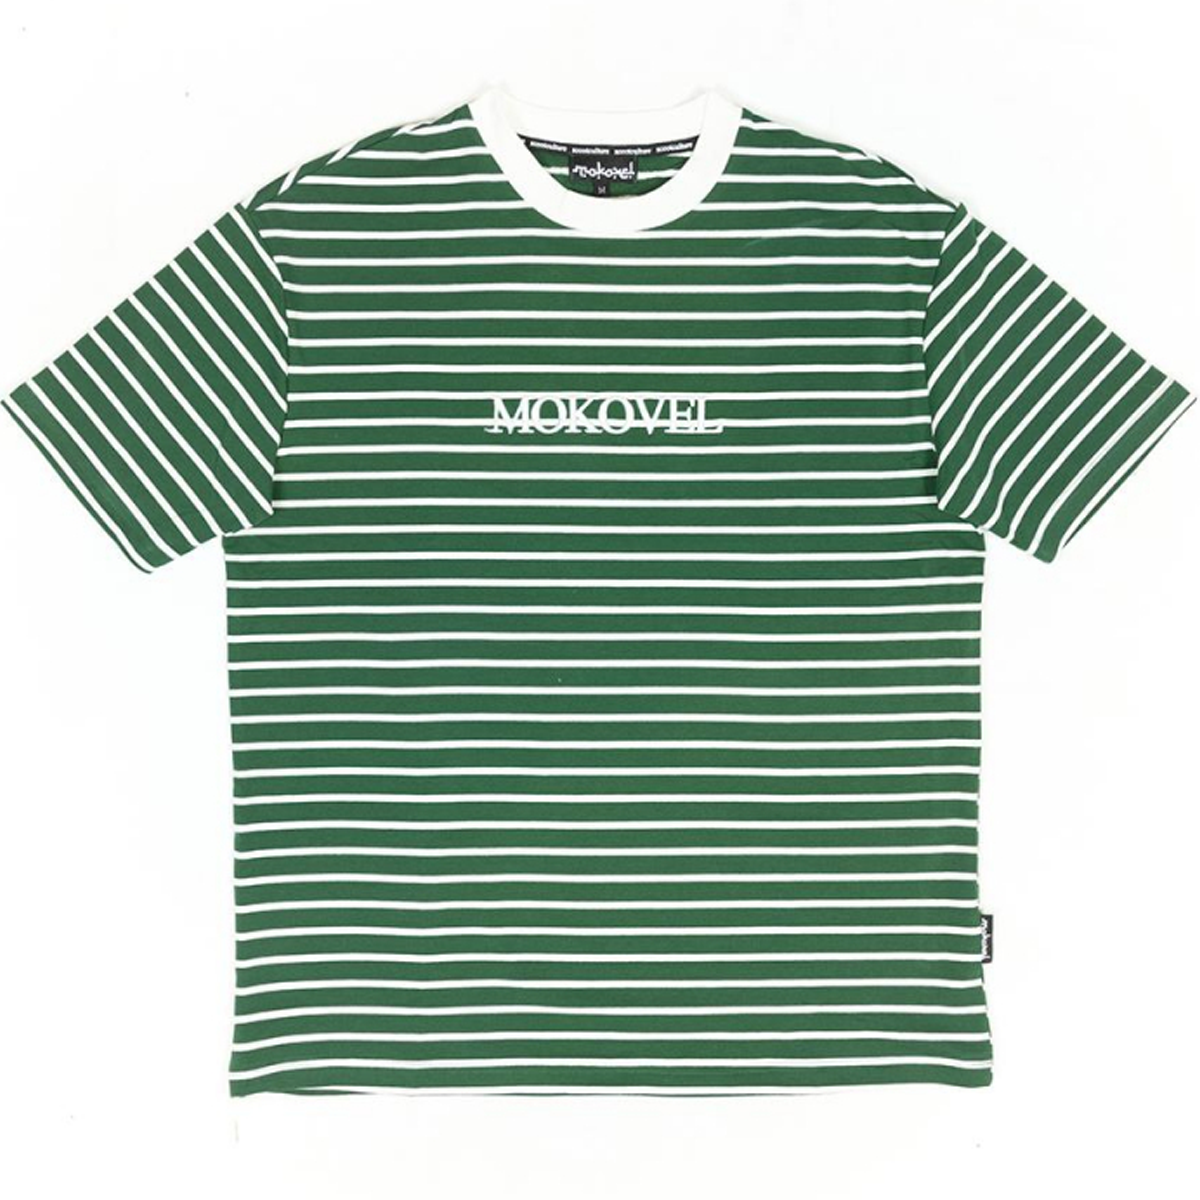 Mokovel Striped T-Shirt